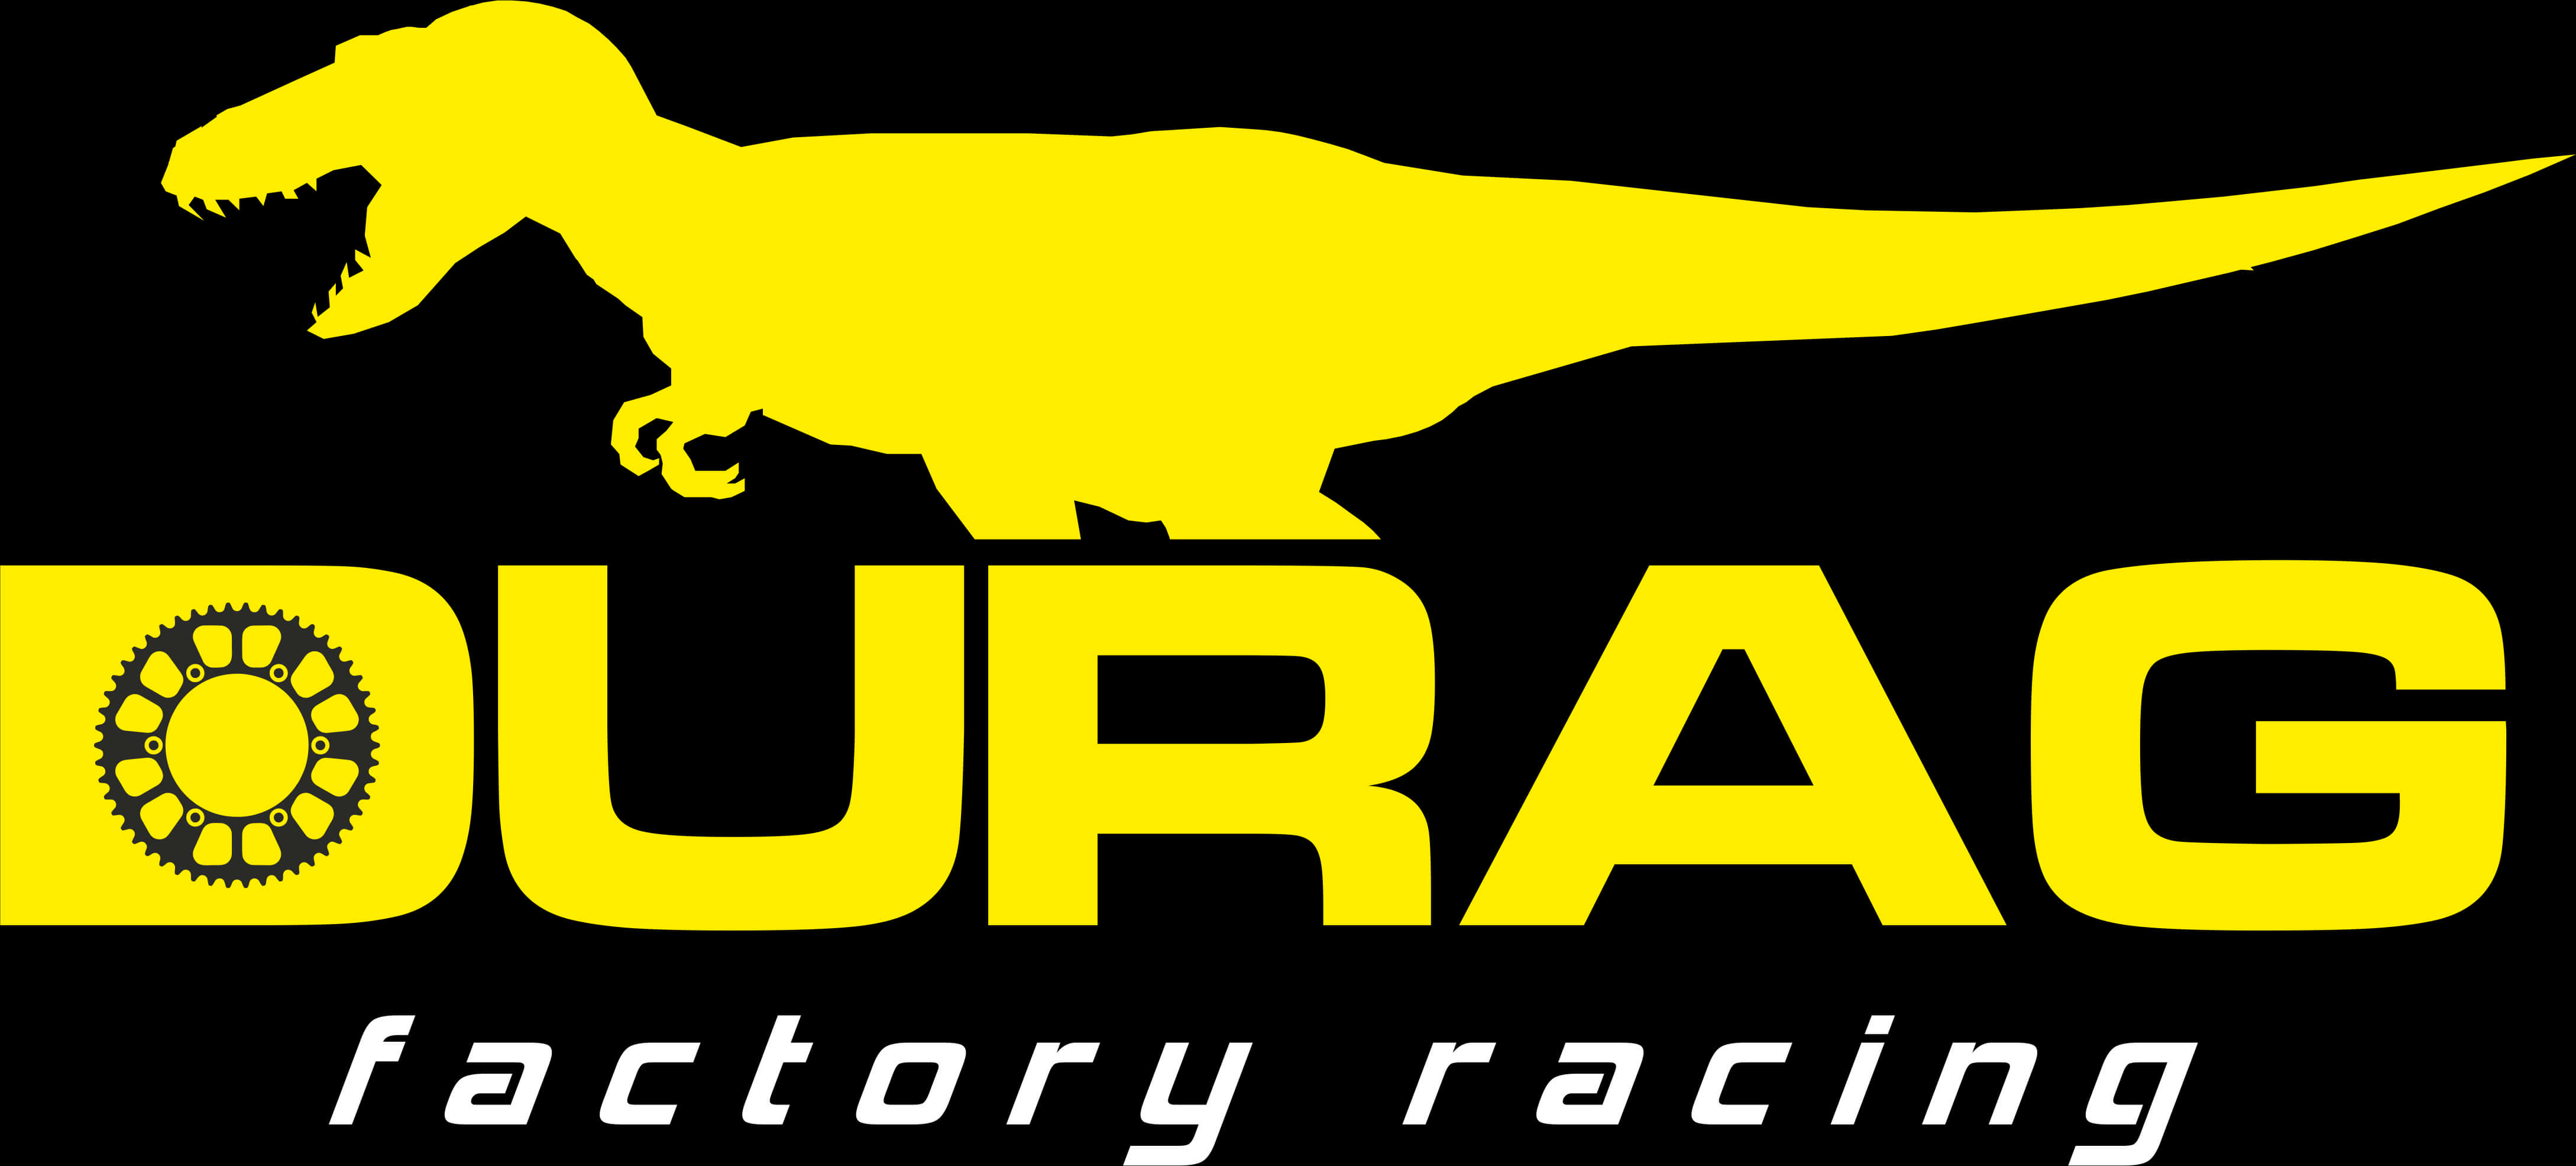 Durag Factory Racing Logo PNG